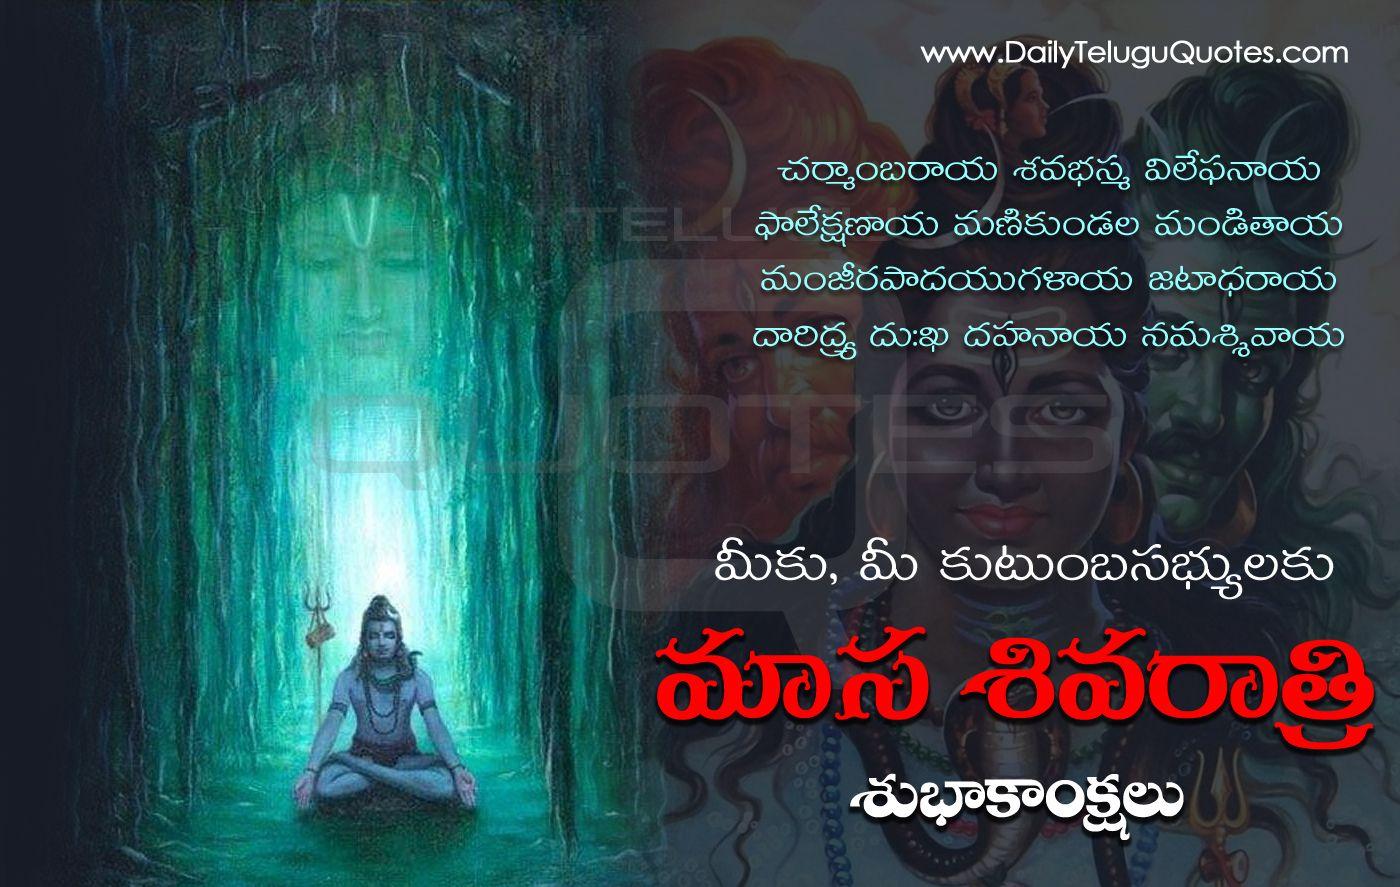 Maha Shivaratri Image and Slokas Telugu Quotes with Nice